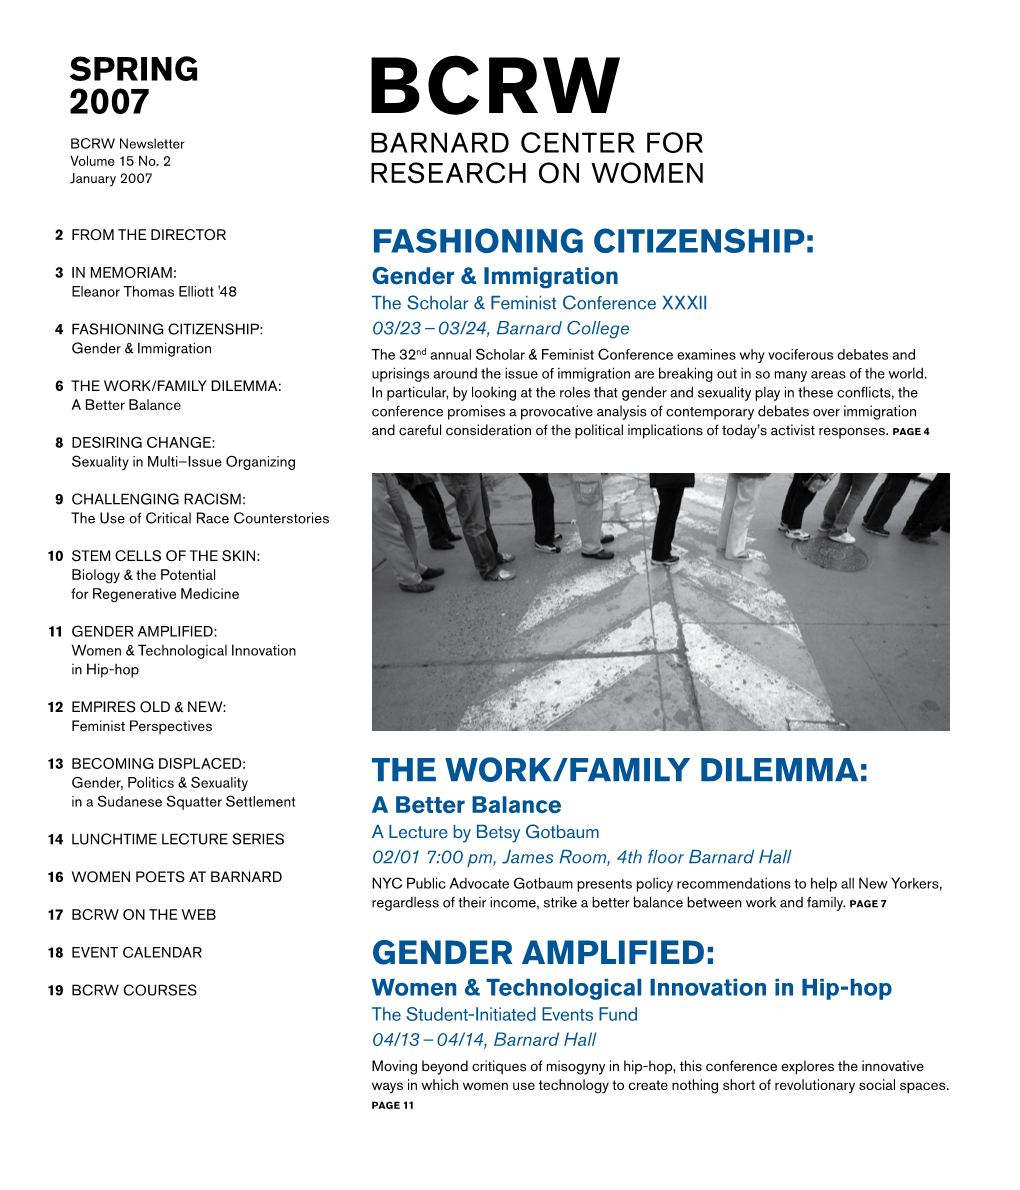 Fashioning Citizenship: the Work/Family Dilemma